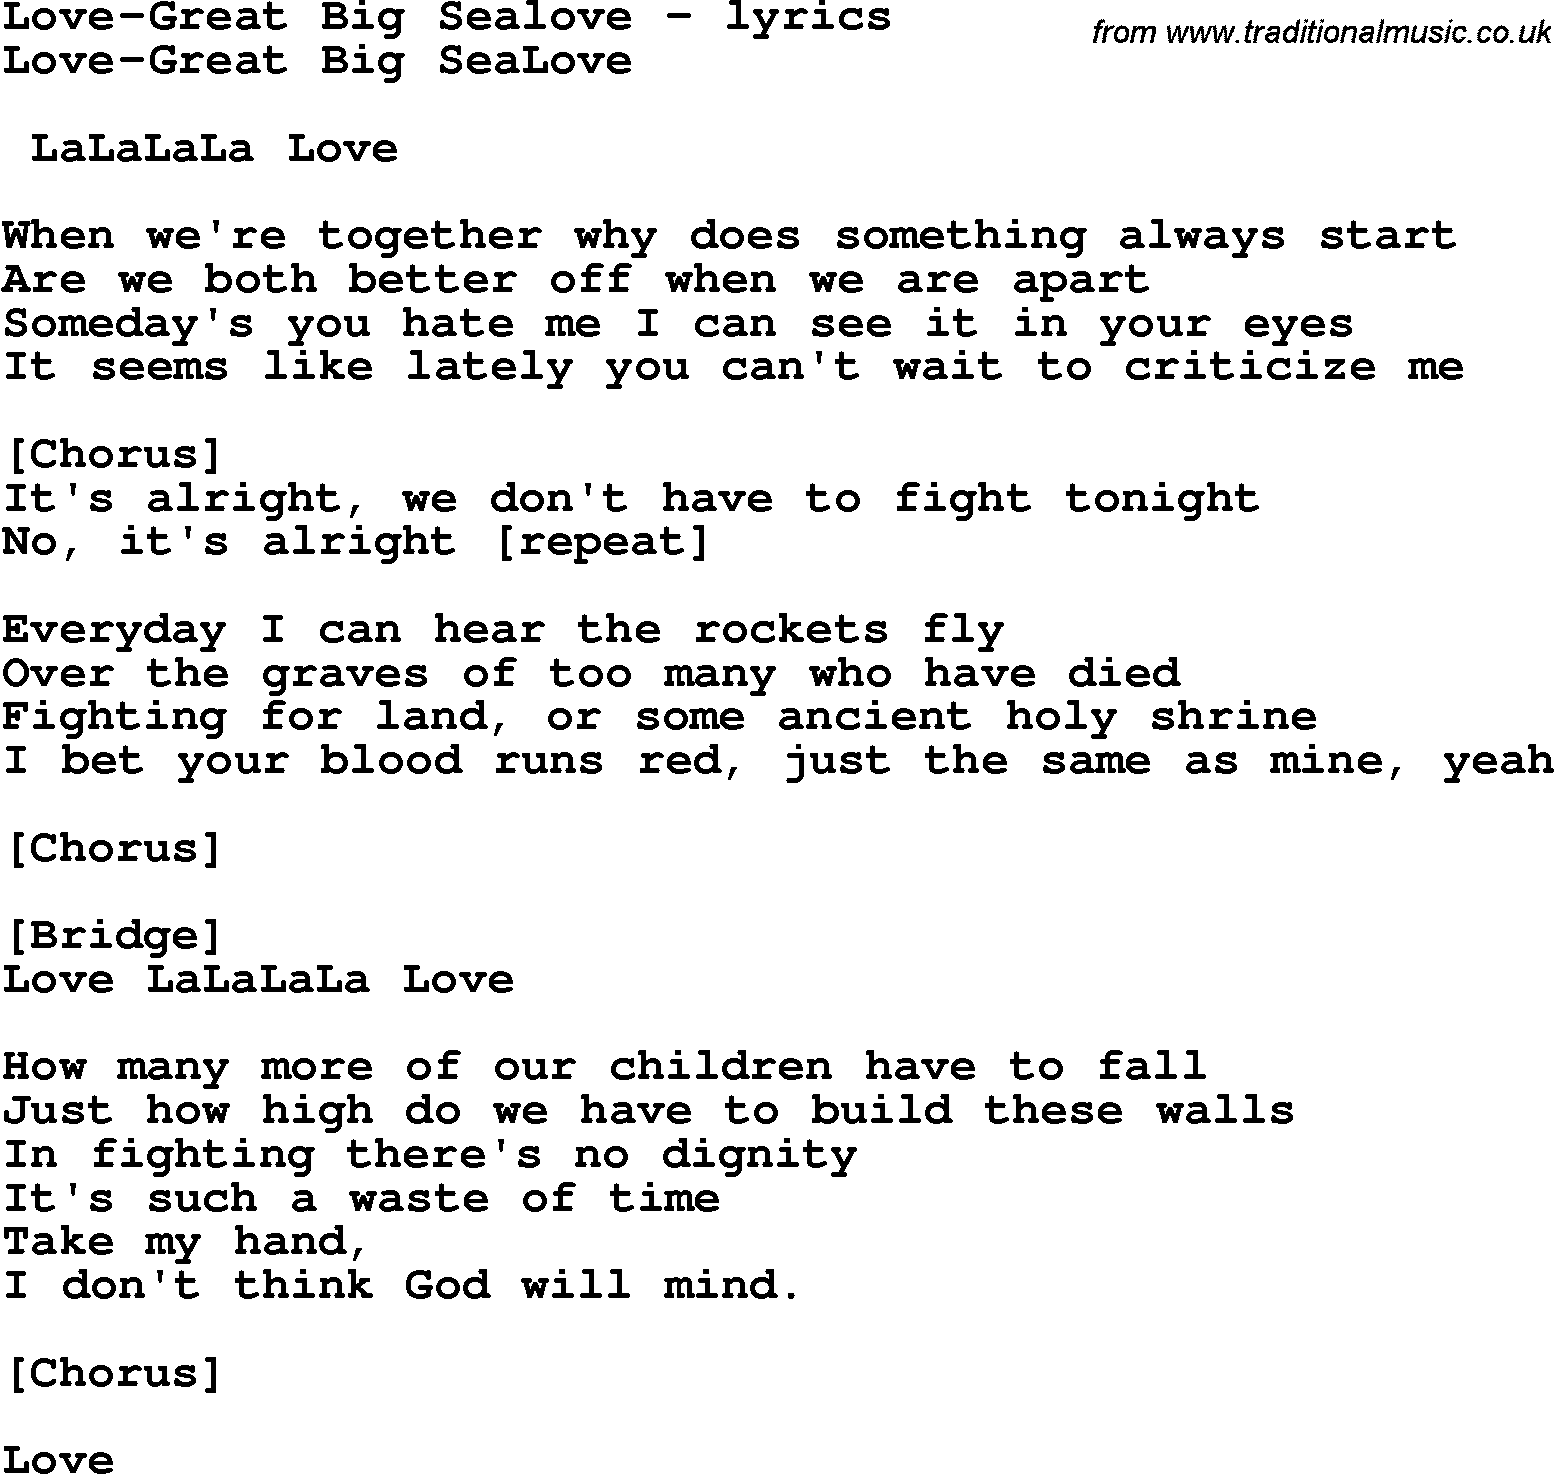 Love Song Lyrics for: Love-Great Big Sealove